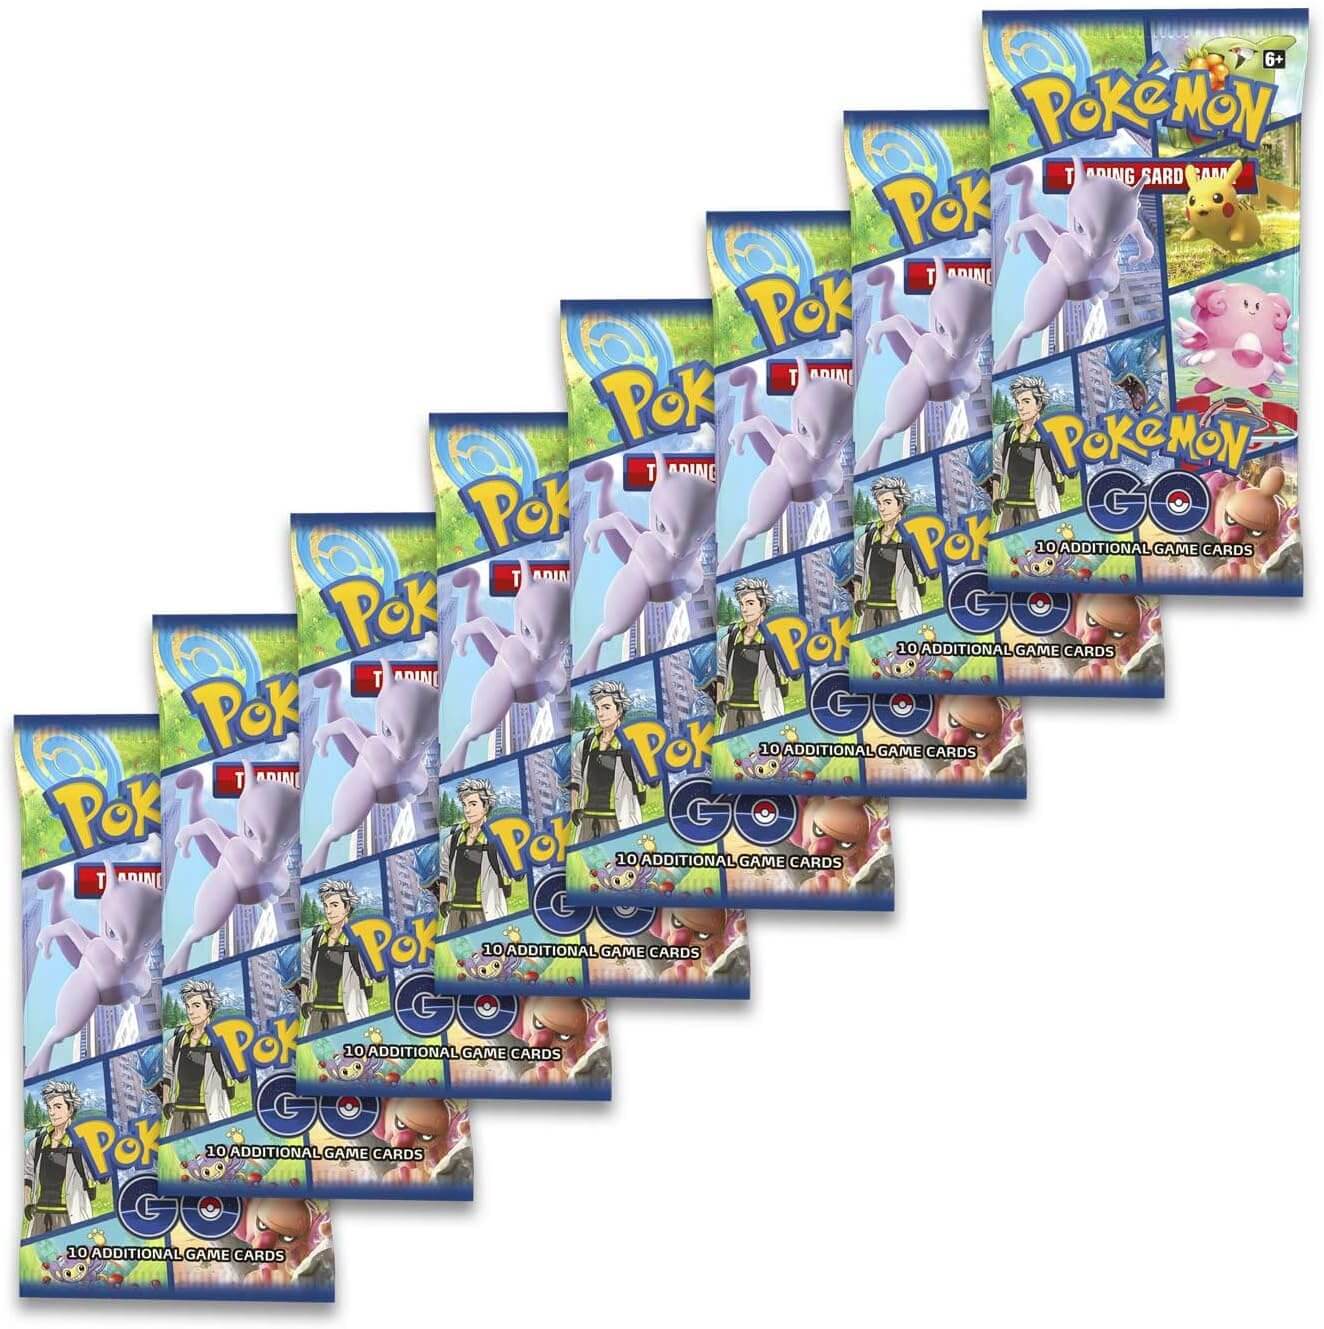 Pokémon  - GO: Radiant Eevee Premium Collection - EN - CardCosmos